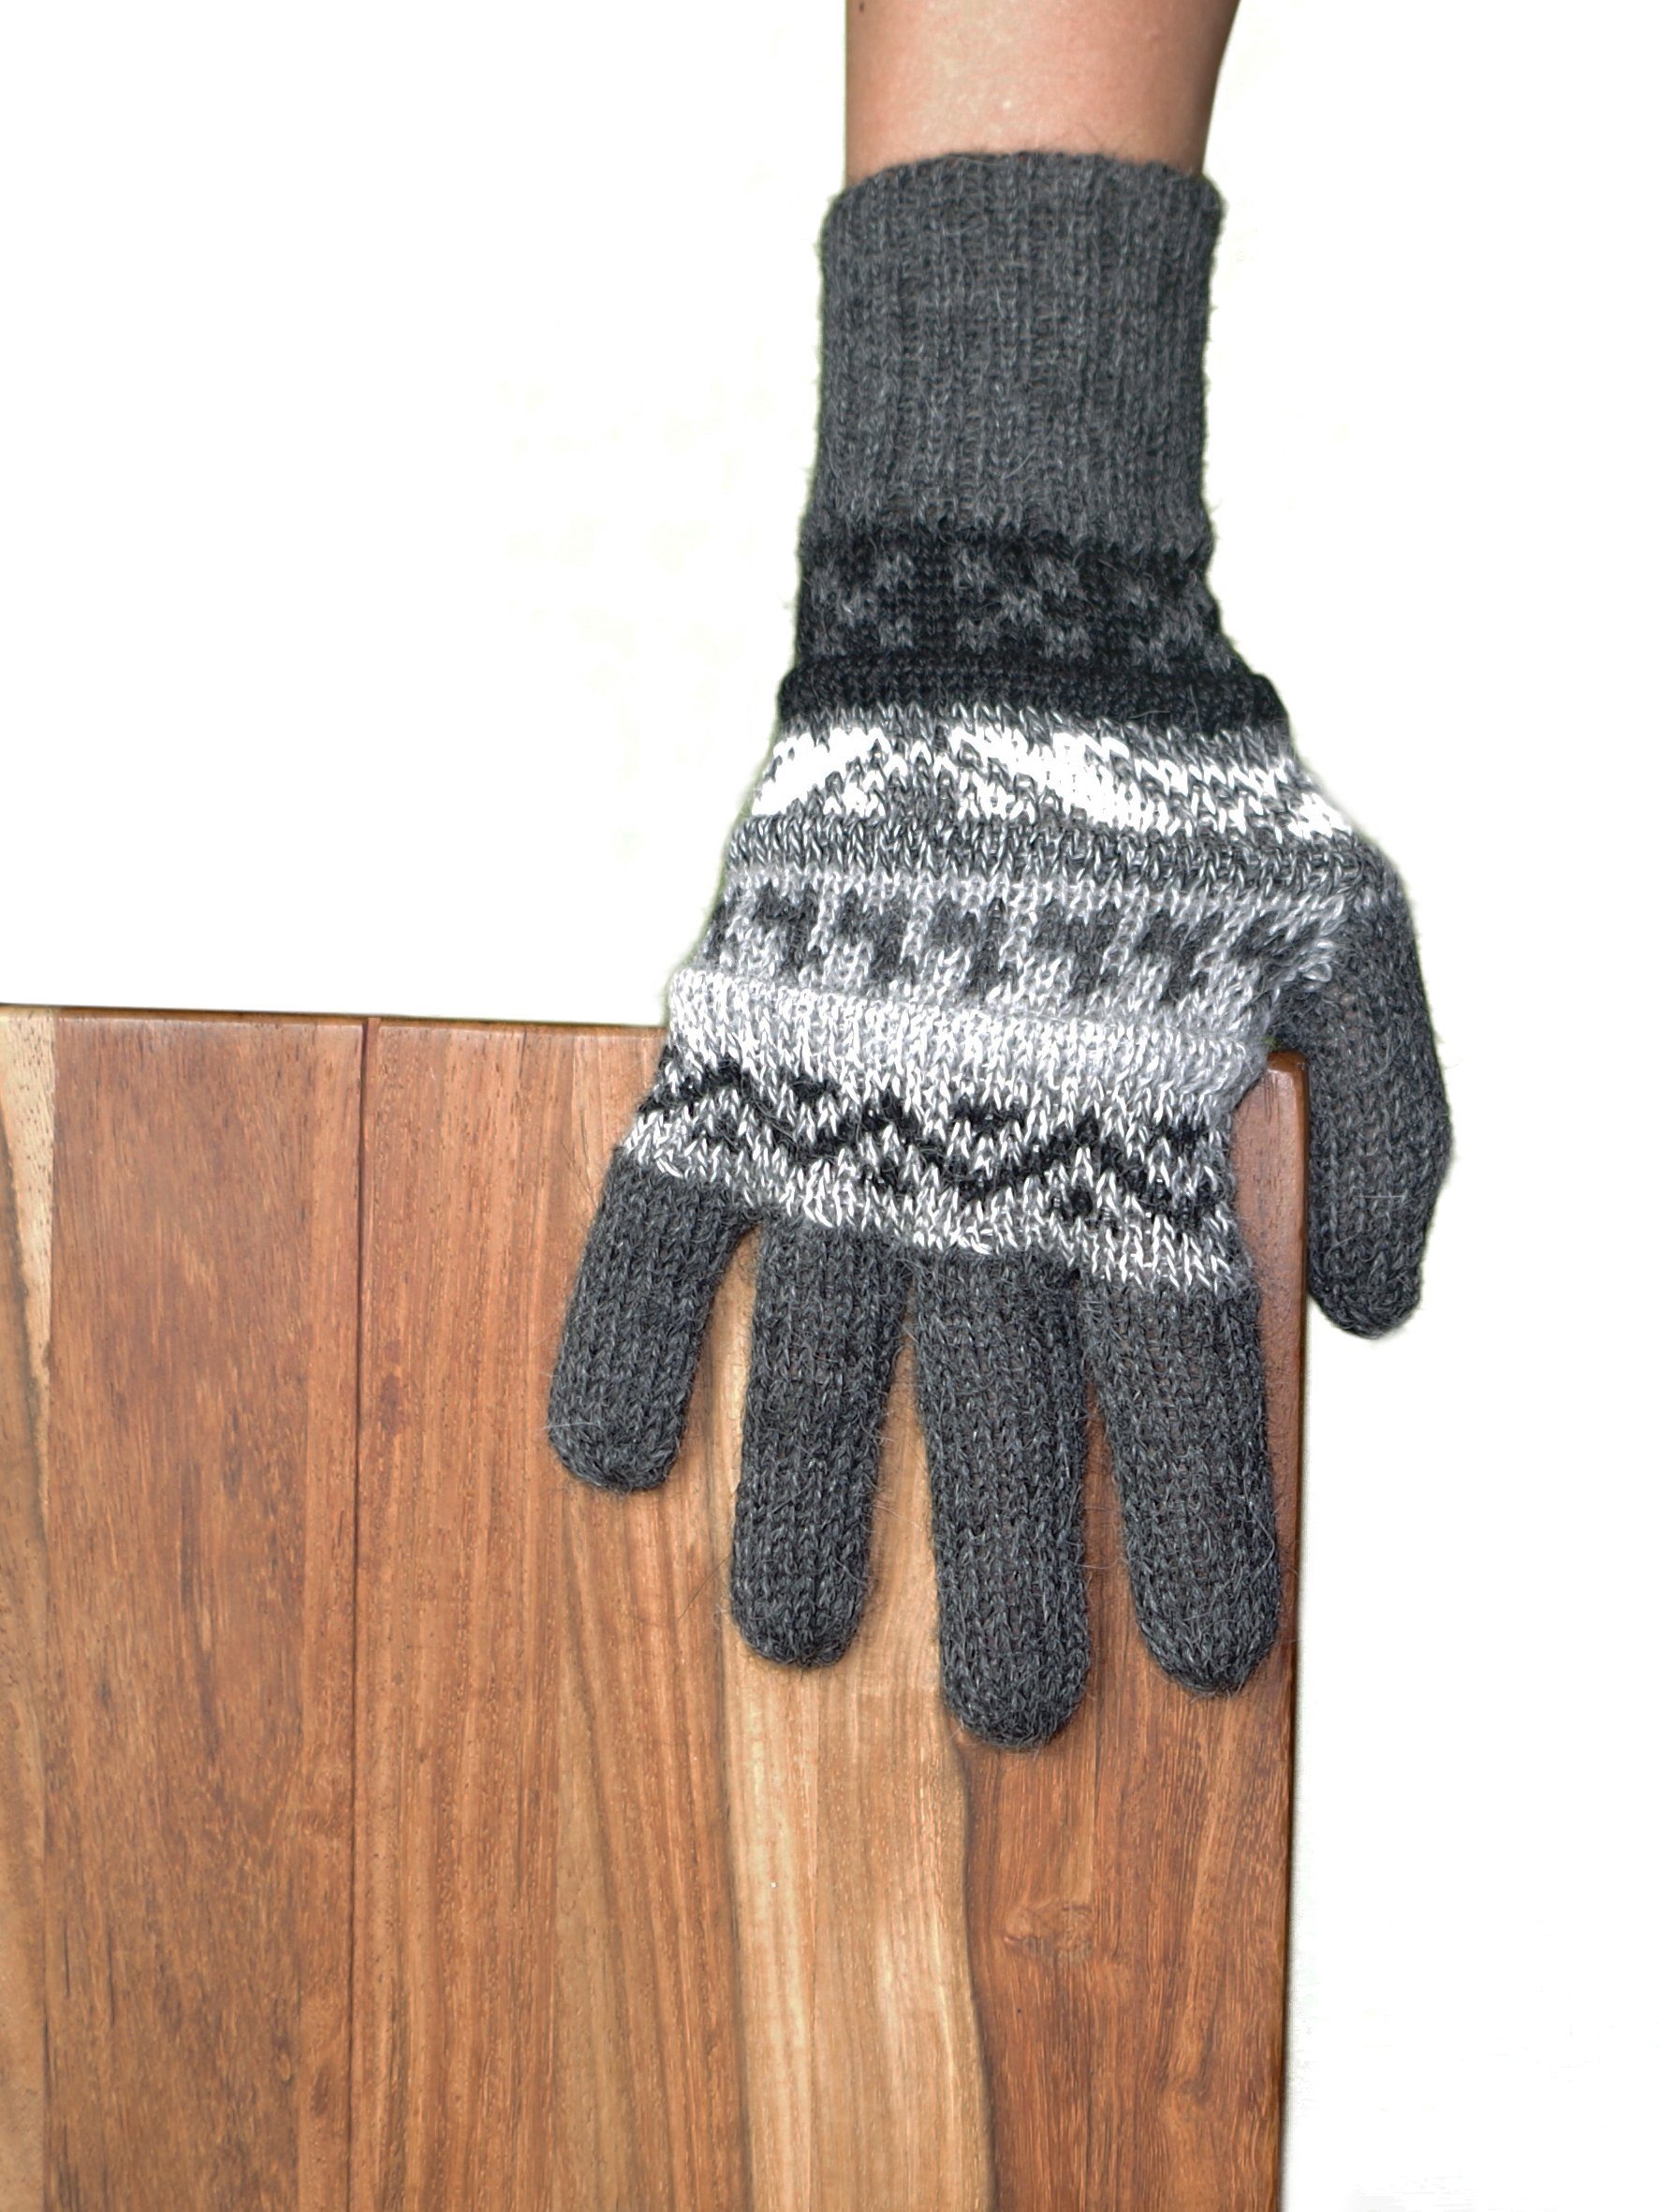 Fingerhandschuhe Alpakawolle Guantilissi Strickhandschuhe 100% grau dunkel Gear aus Alpaka Posh